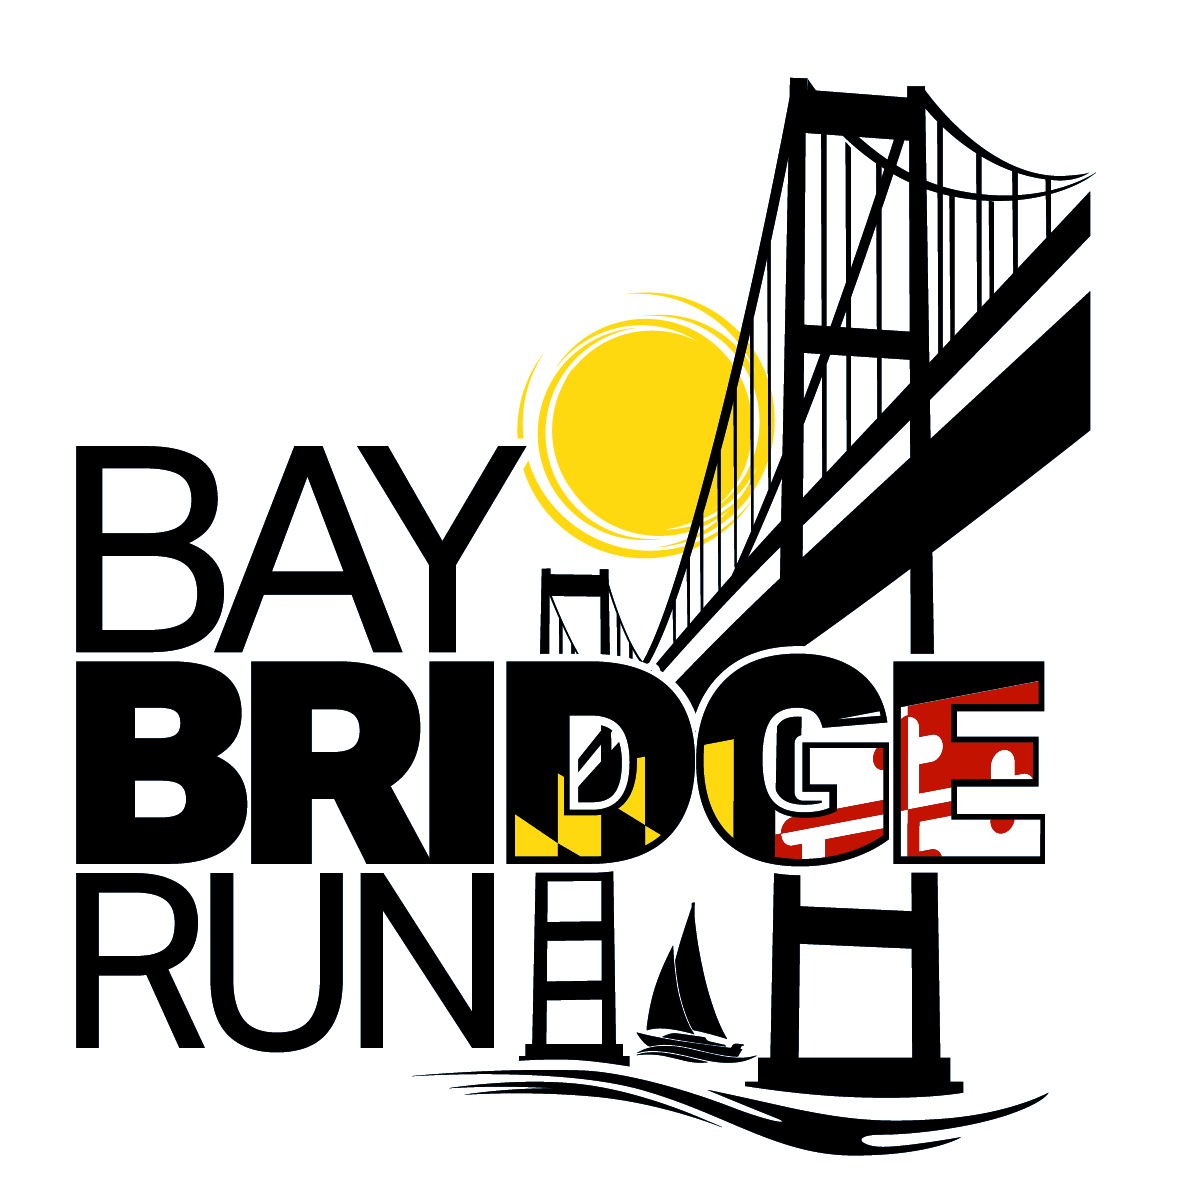 The 2022 Bay Bridge Run is Set for November 13